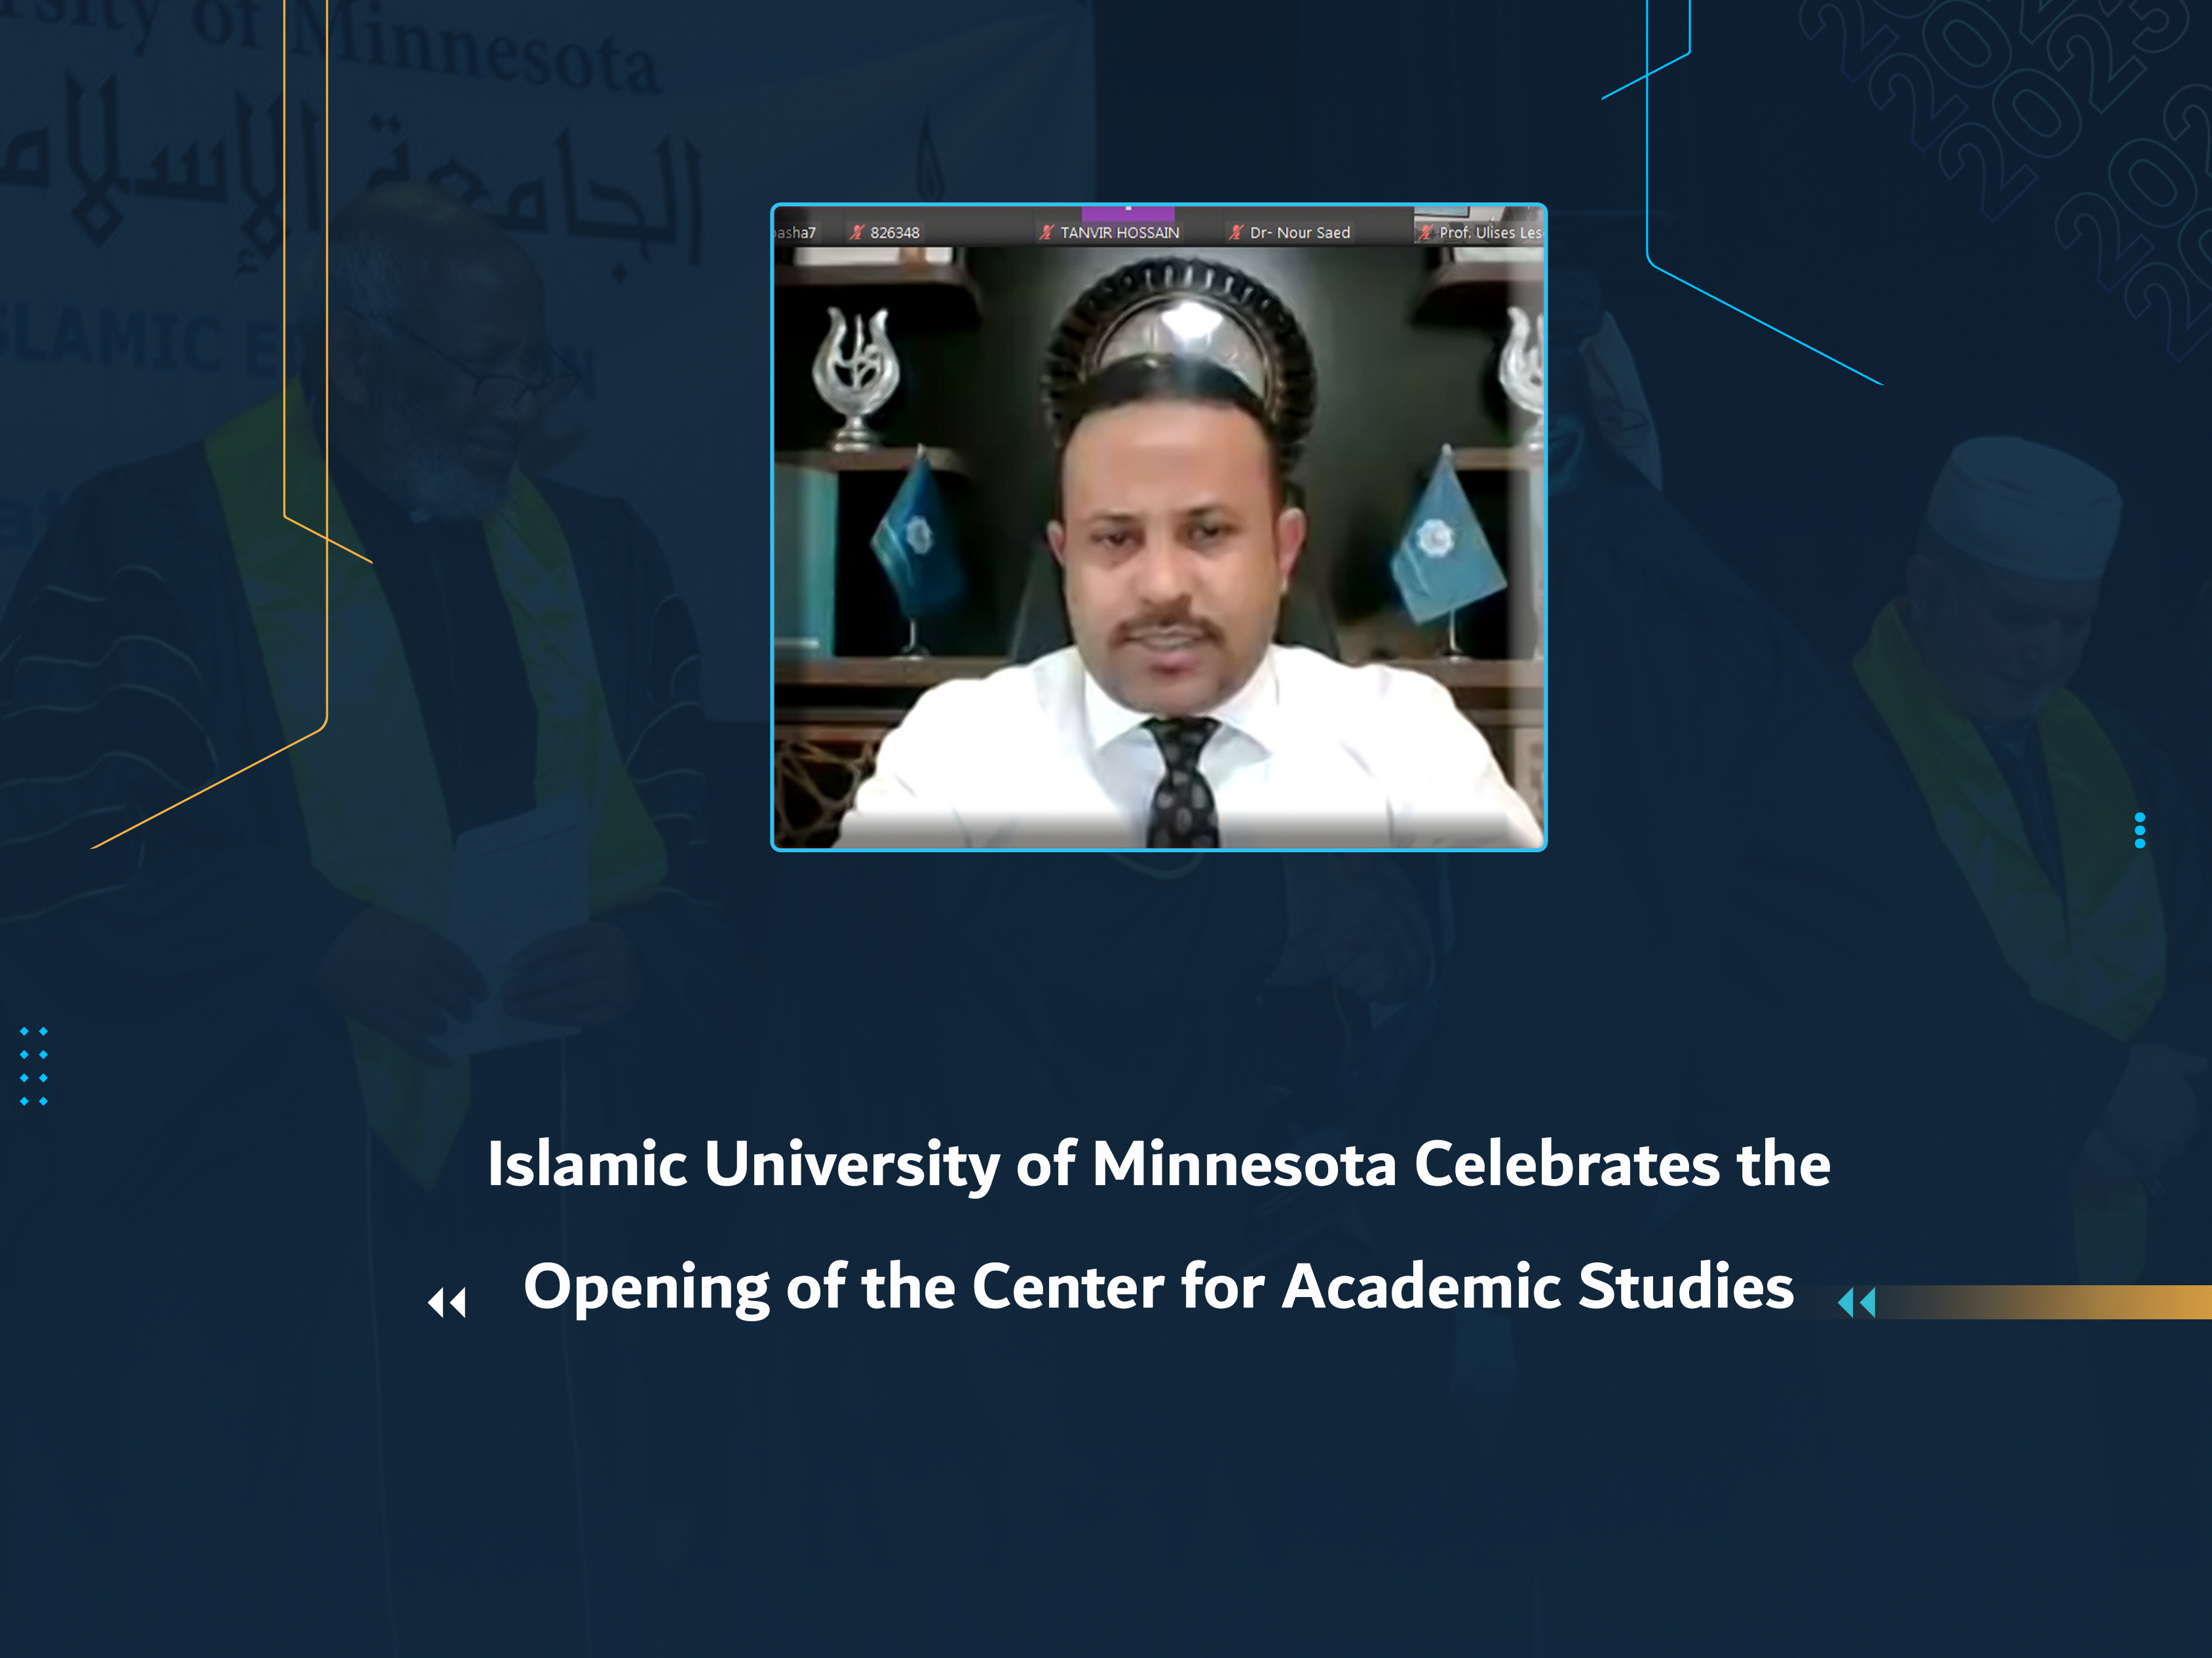 Islamic University of Minnesota Celebrates the Opening of the Center for Academic Studies